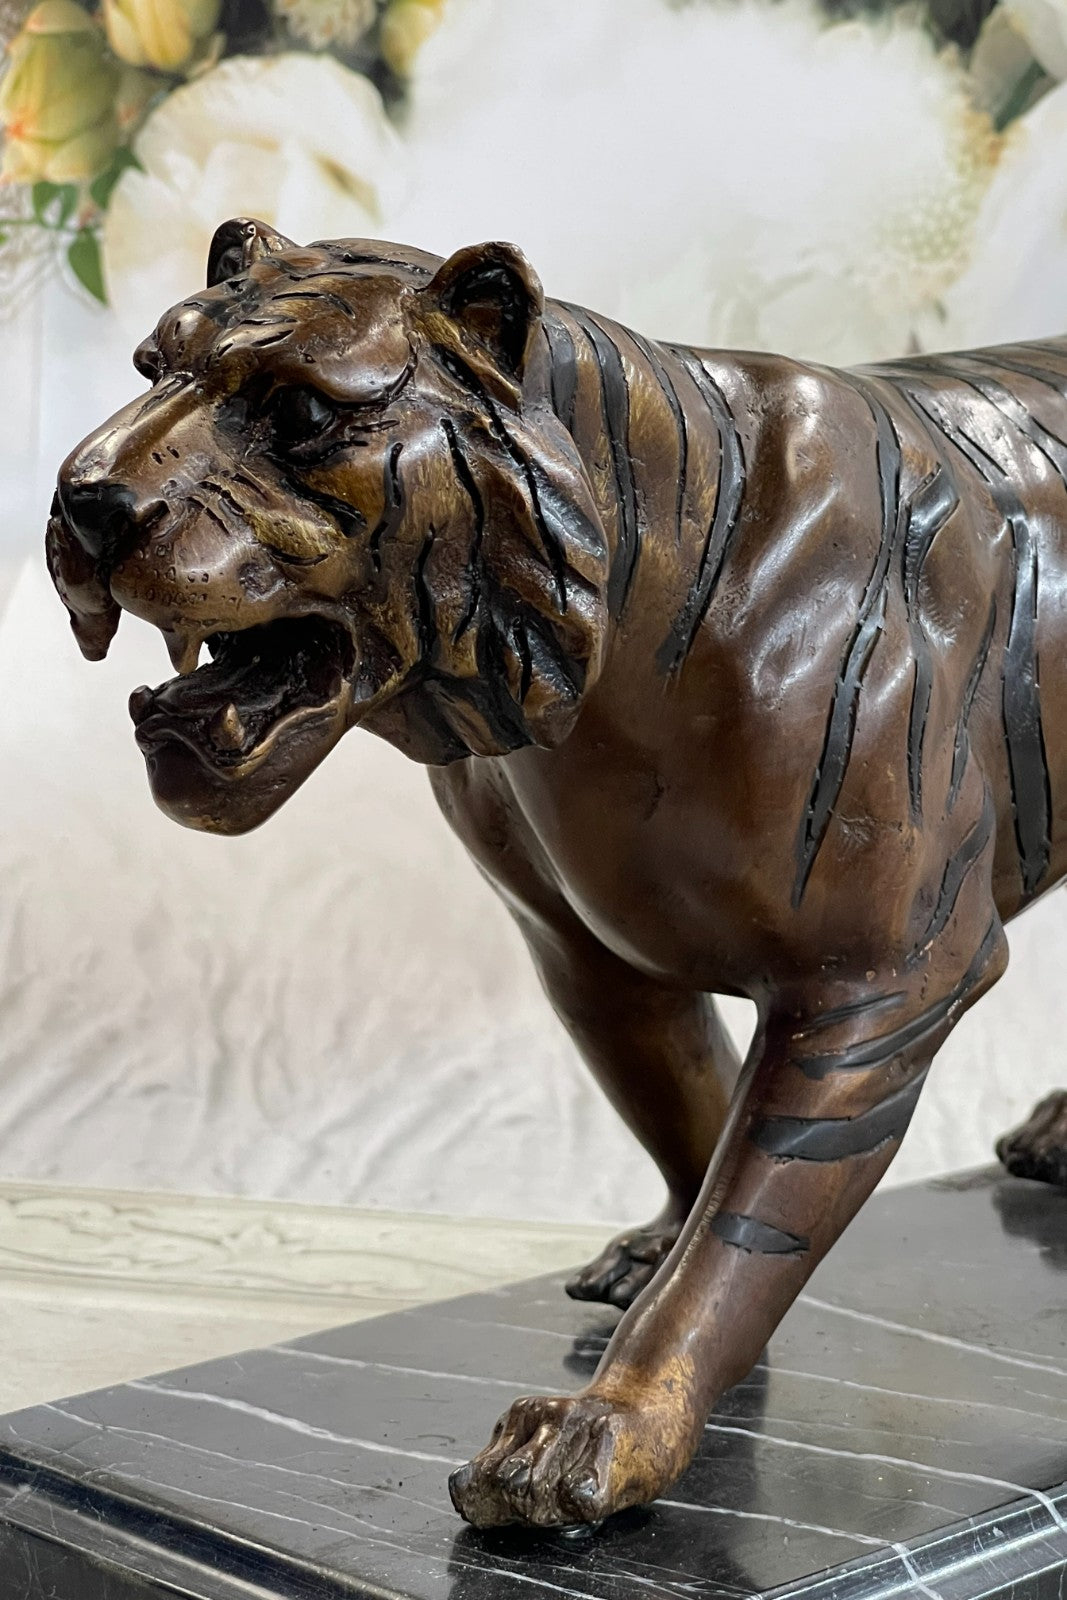 Handcrafted Detailed Indian Tiger Bronze Sculpture Figurine Figure Home Decor